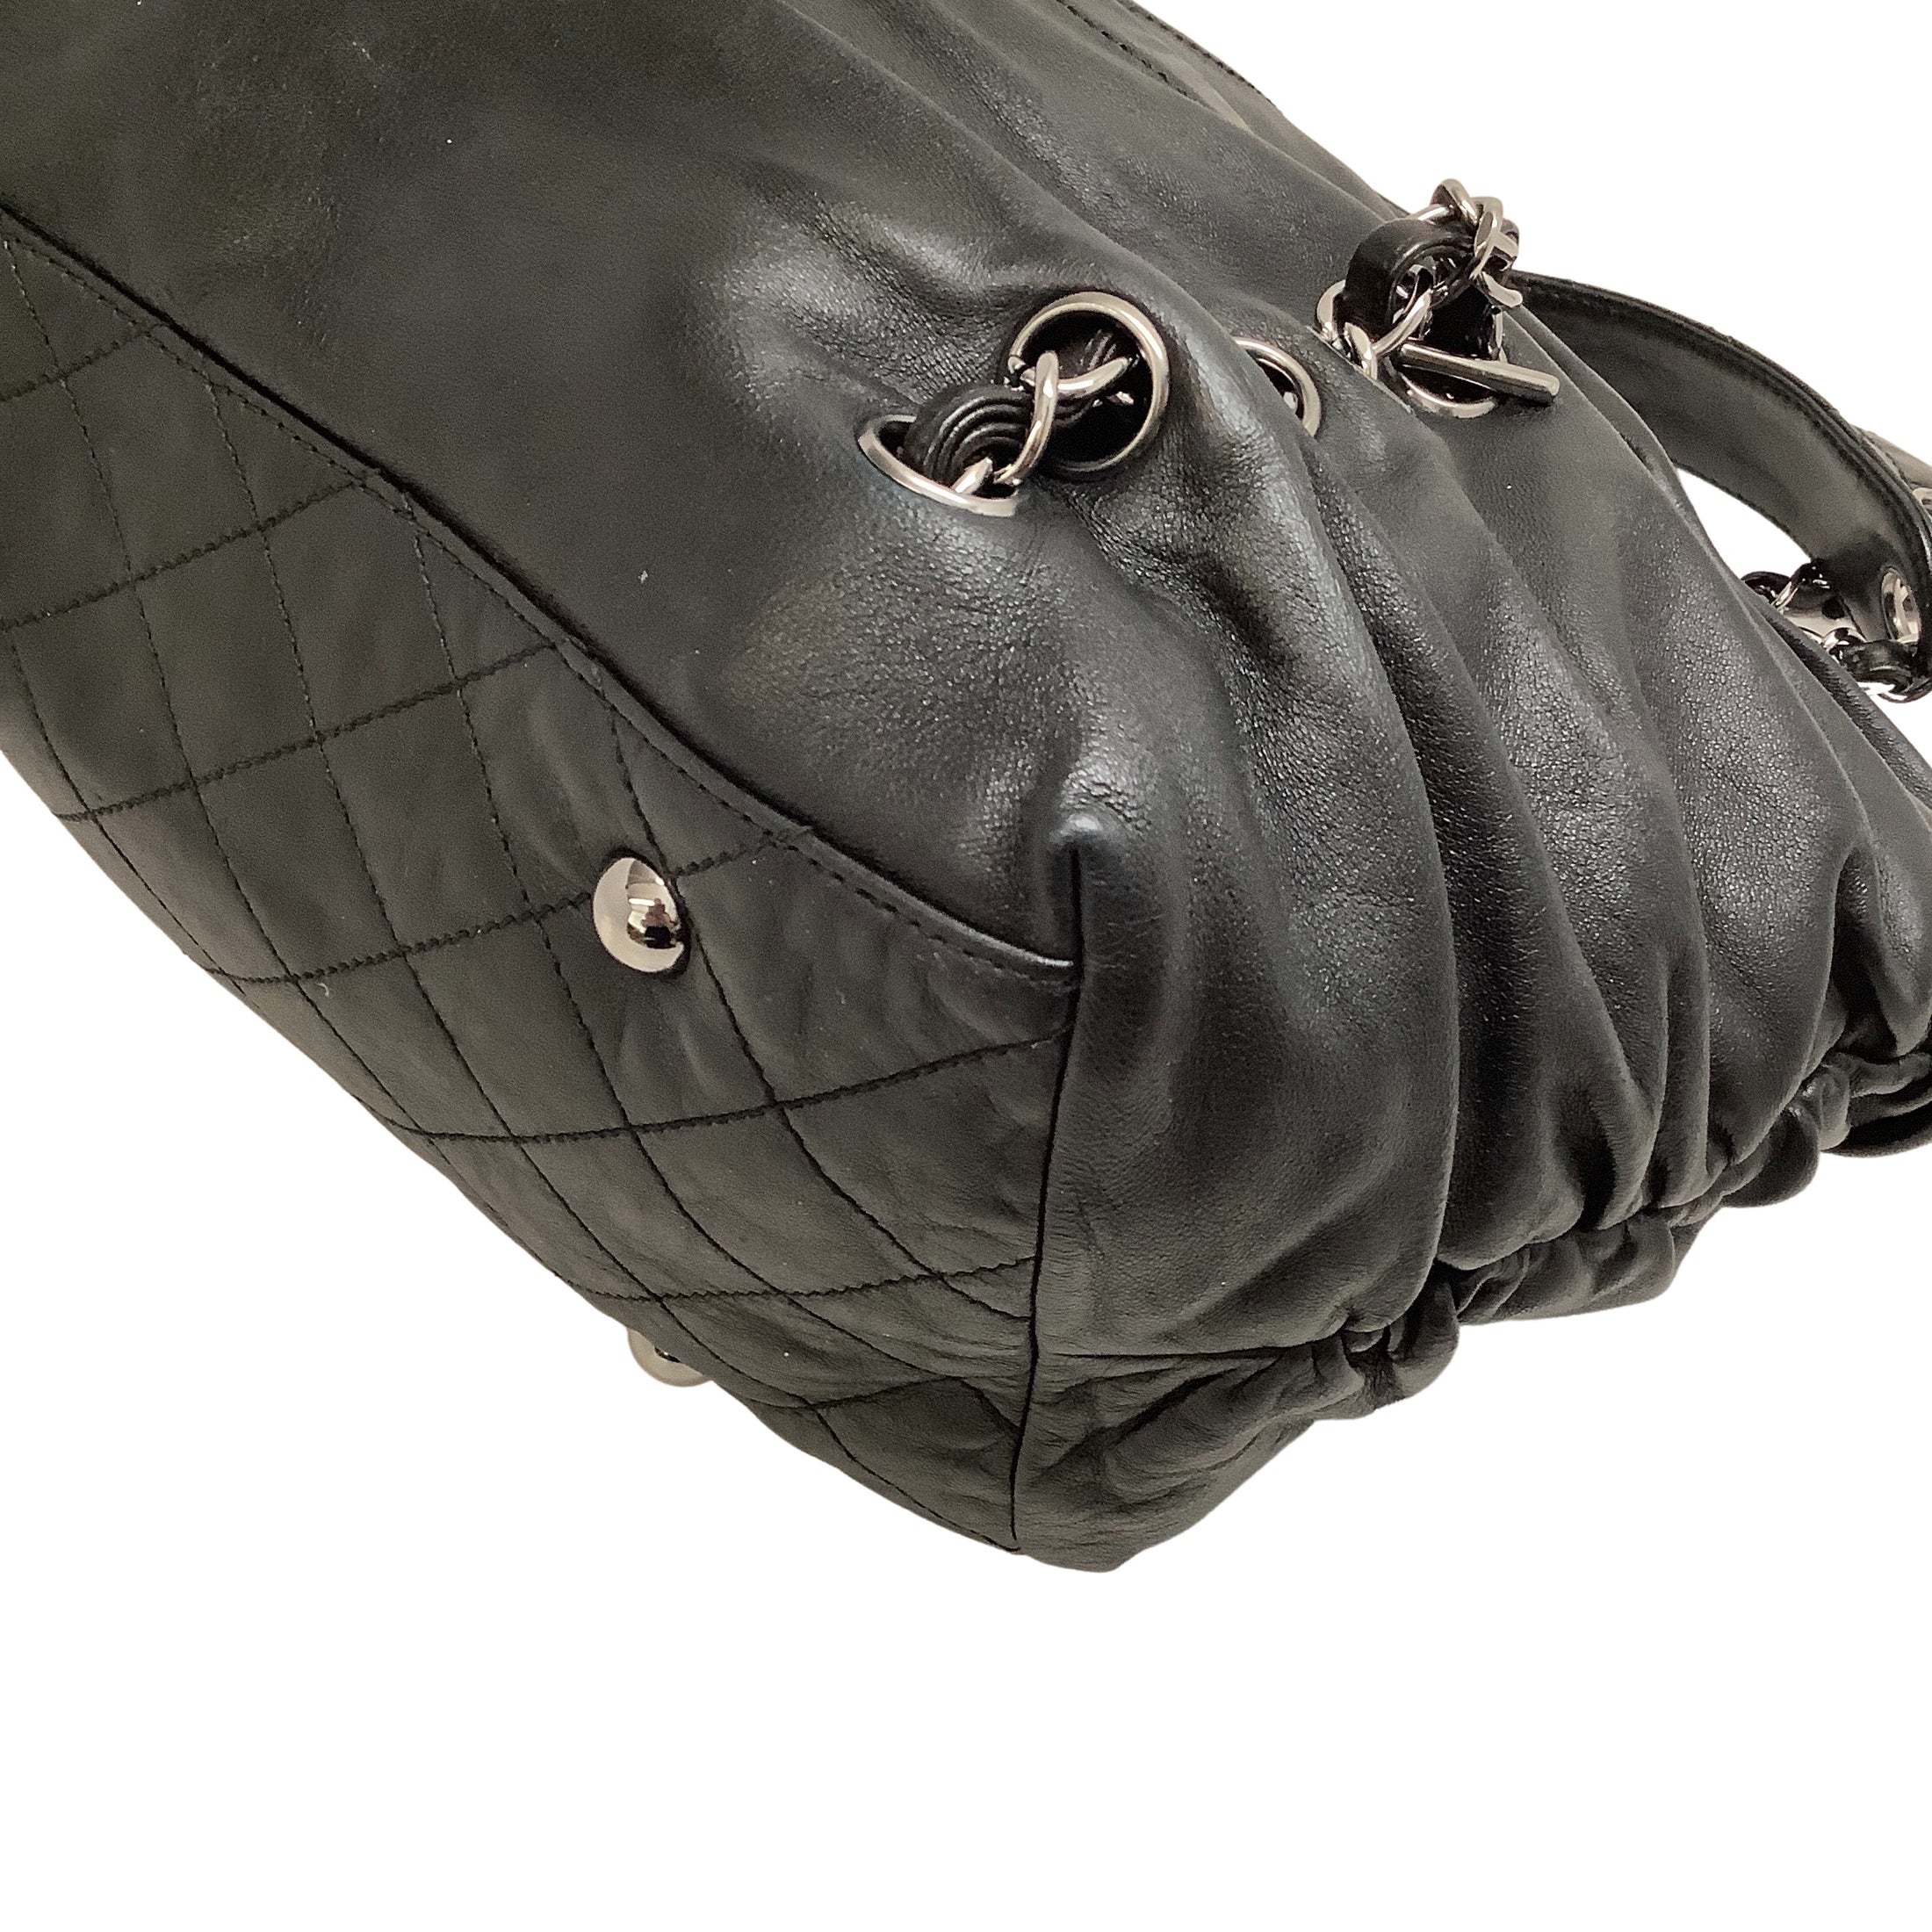 Chanel 2006-2008 Black Leather Sharpei Tote Bag